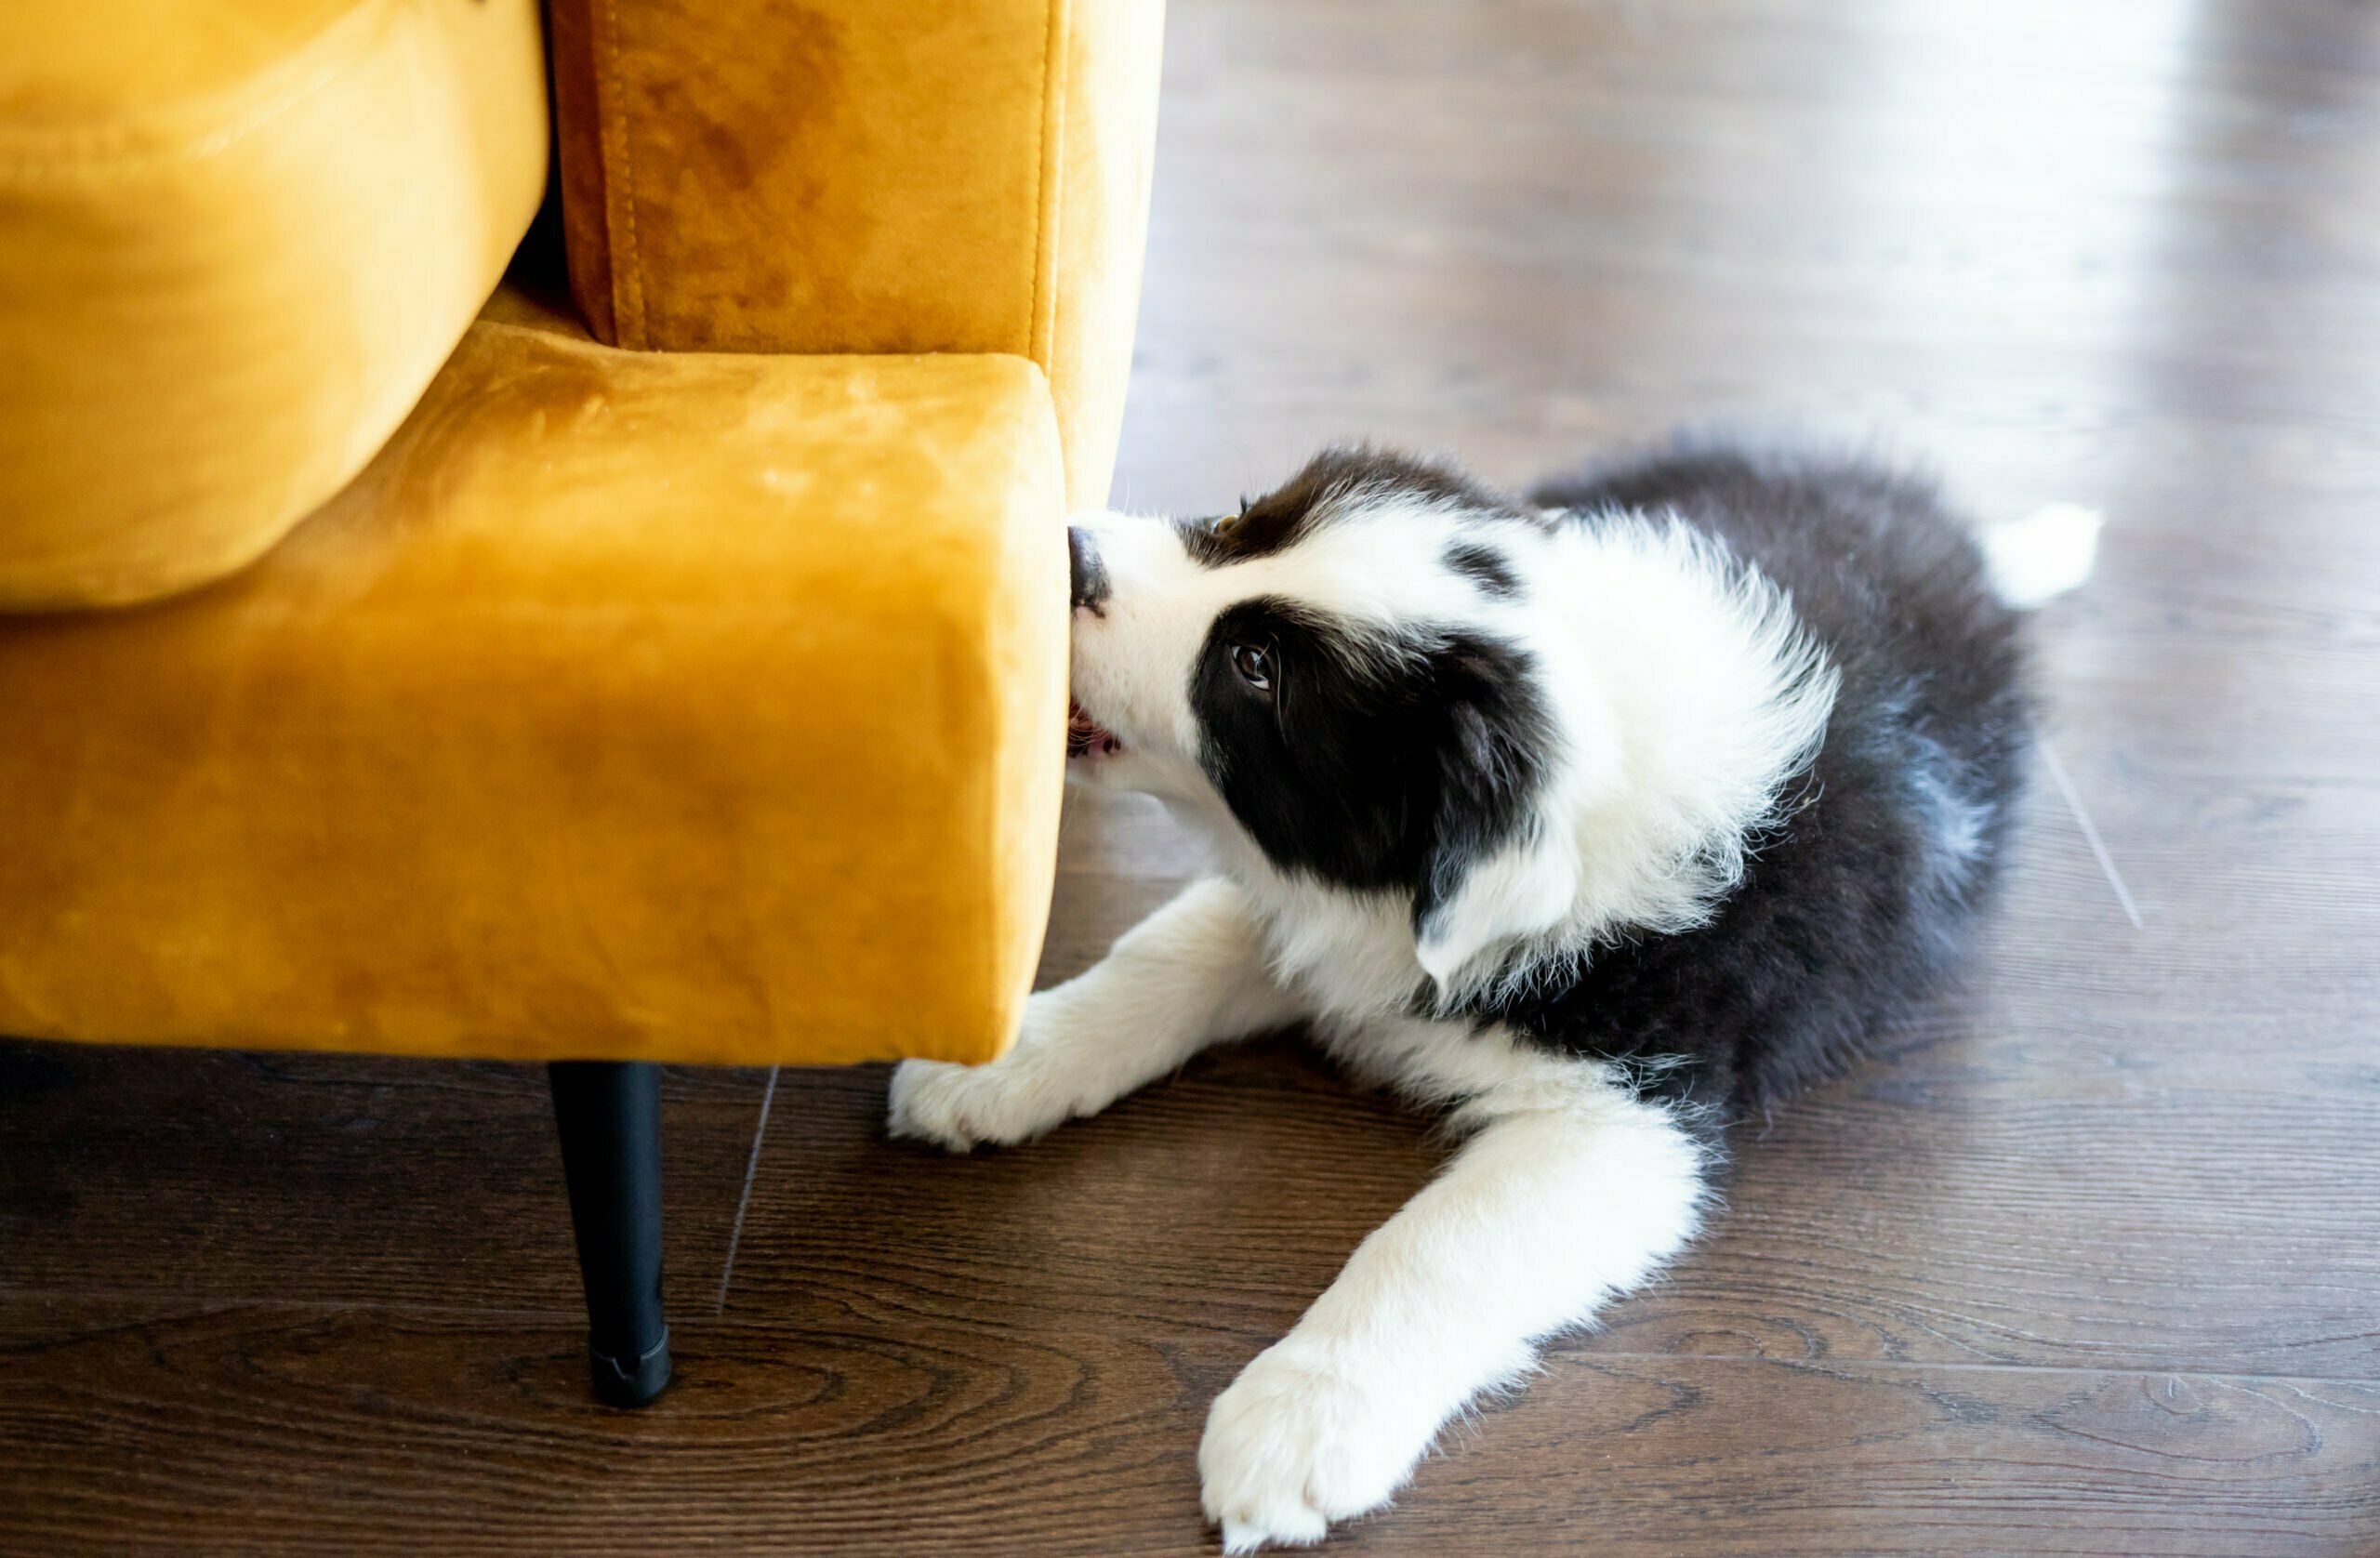 puppy border collie dog bites furniture at home 2021 12 09 08 27 37 utc